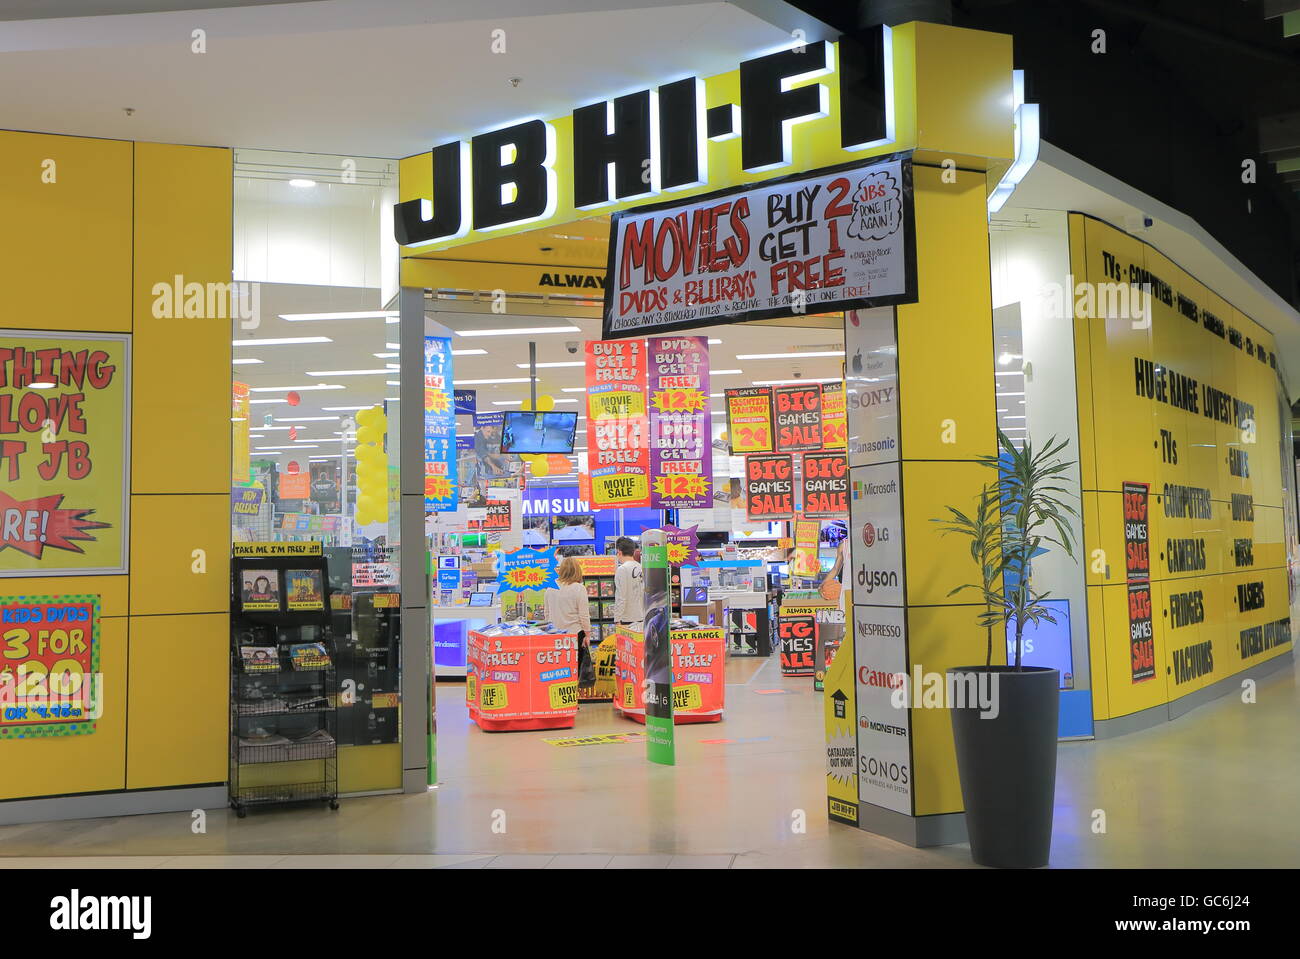 Jb Hi Fi Set To Launch Massive Black Friday Sale On Selected